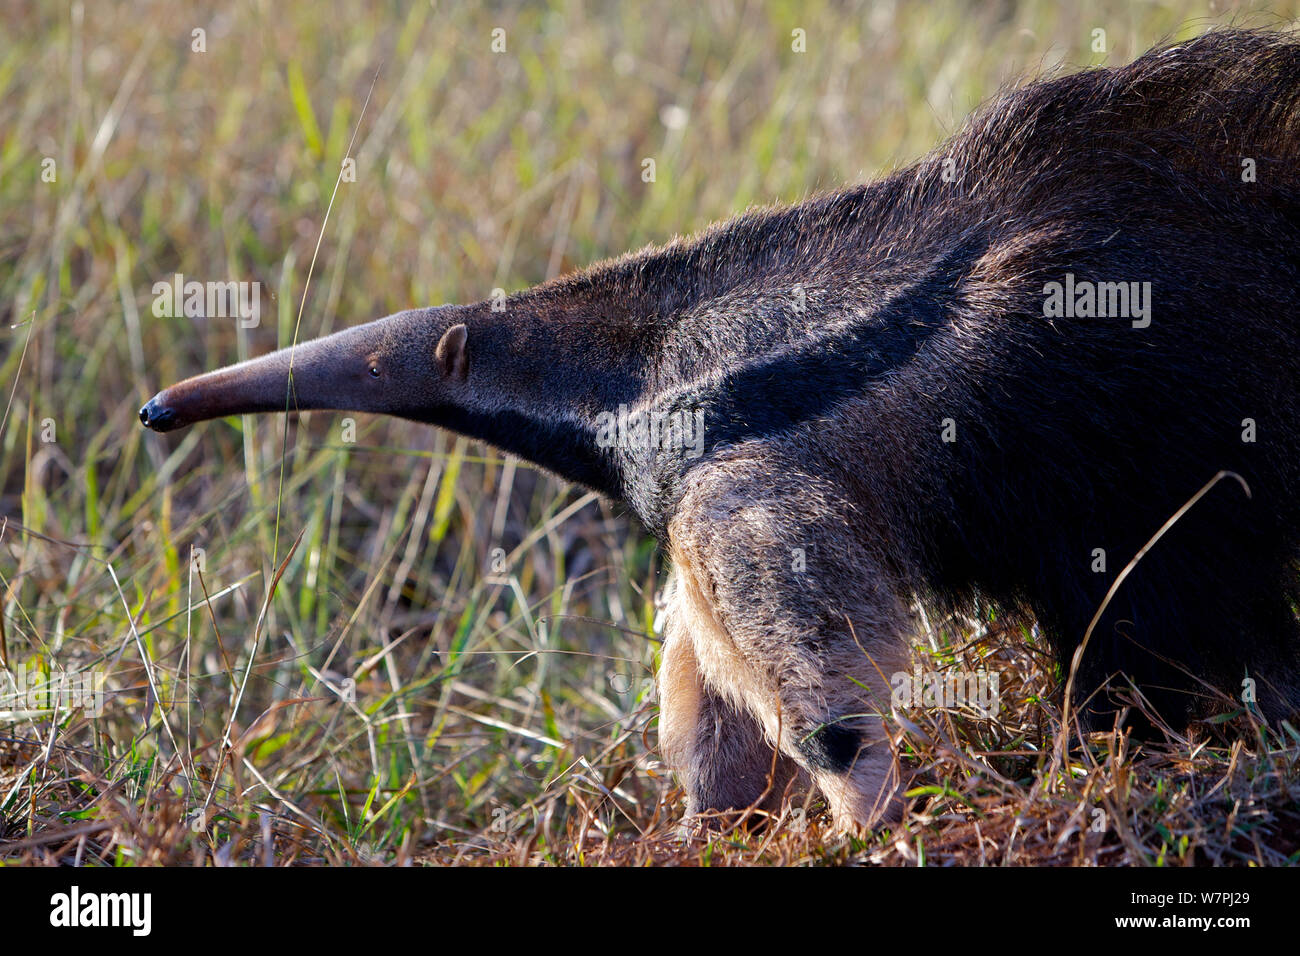 Giant anteater (Myrmecophaga tridactyla) nelle praterie, Argentina Foto Stock